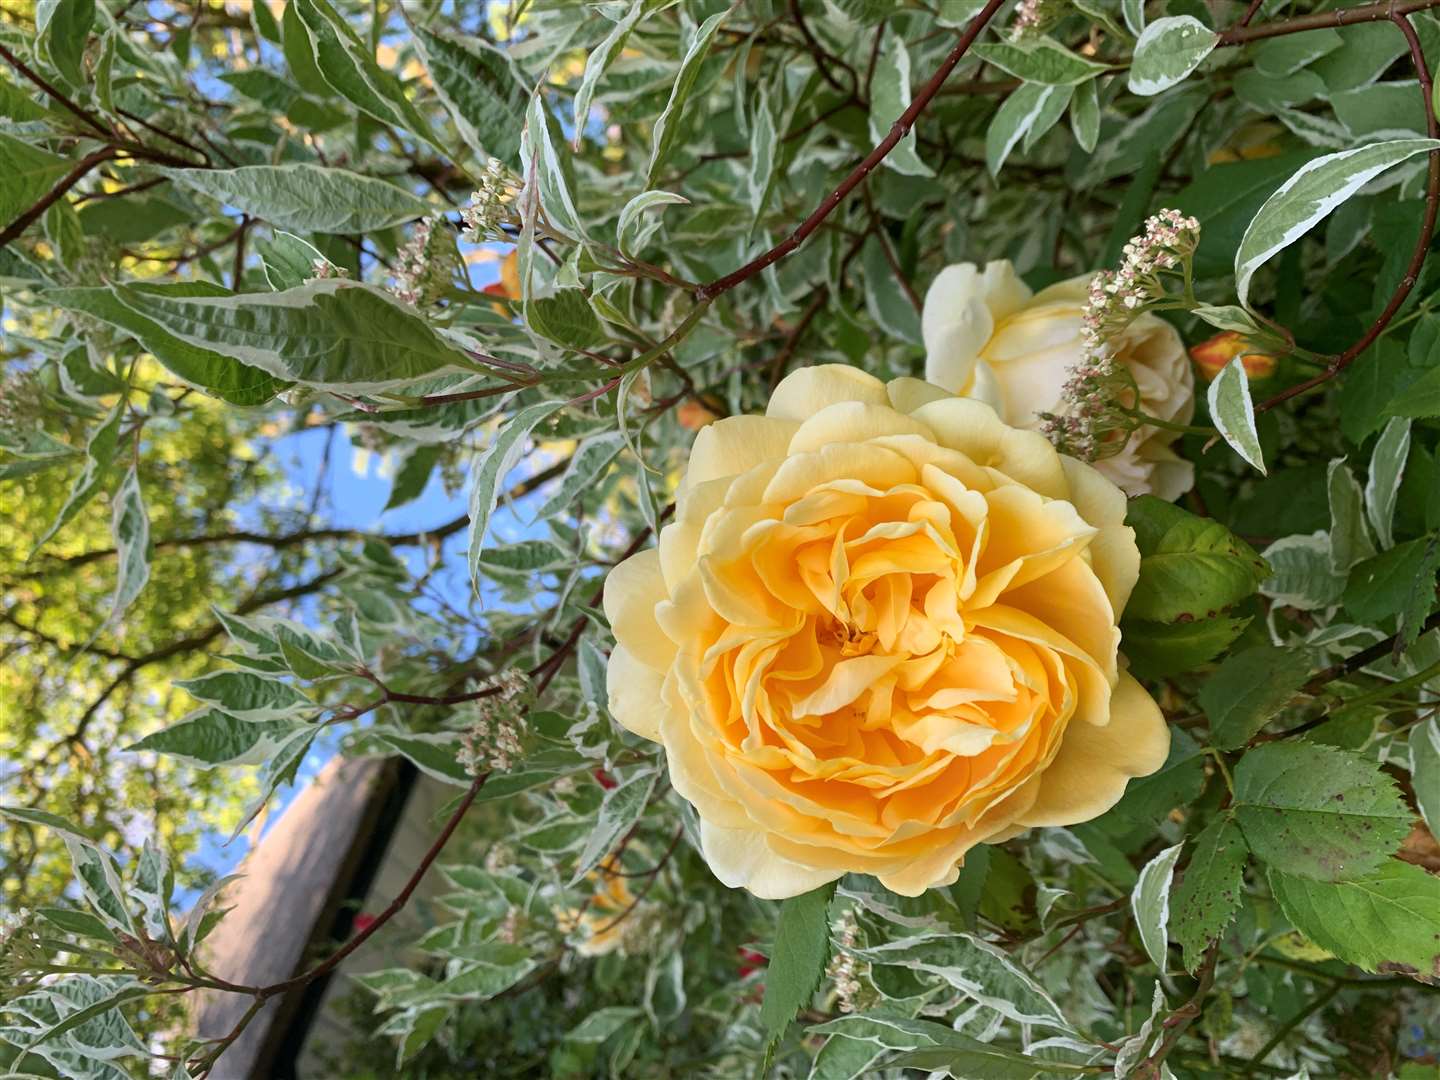 Princess Alexandra chose the golden celebration rose (Buckingham Palace/PA)